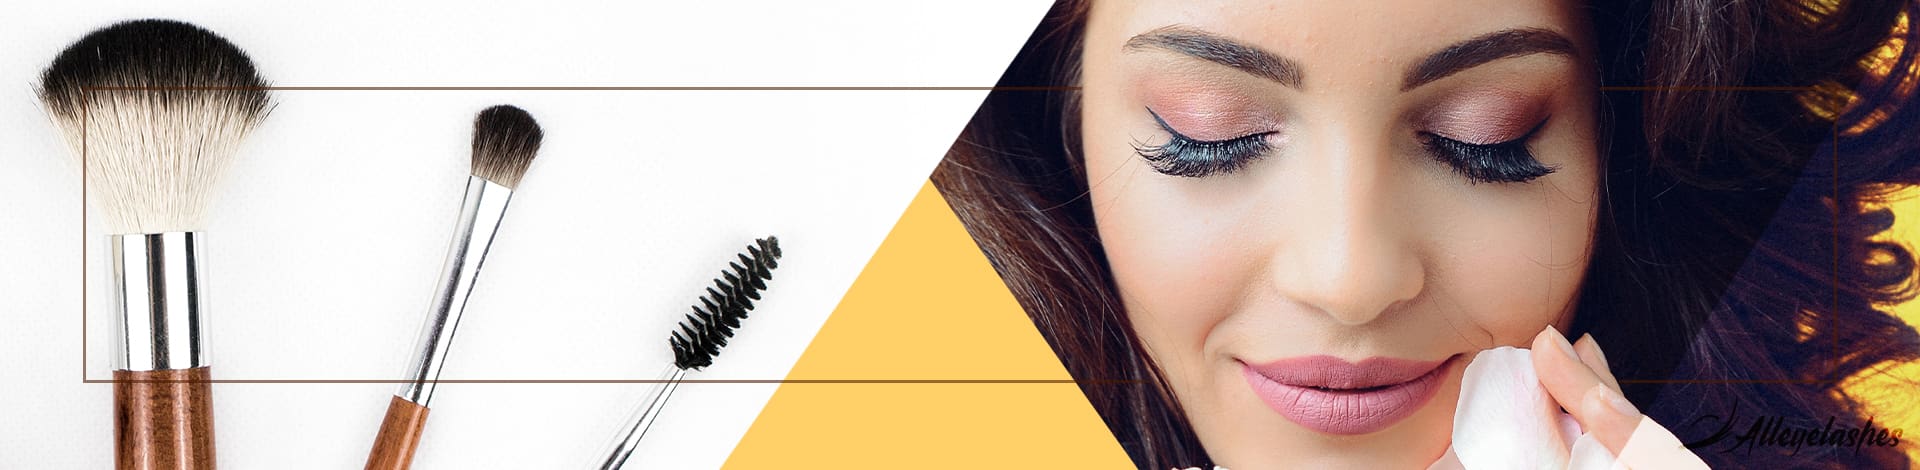 5 Tips to Avoid Those Dreaded Tadpole Eyebrows